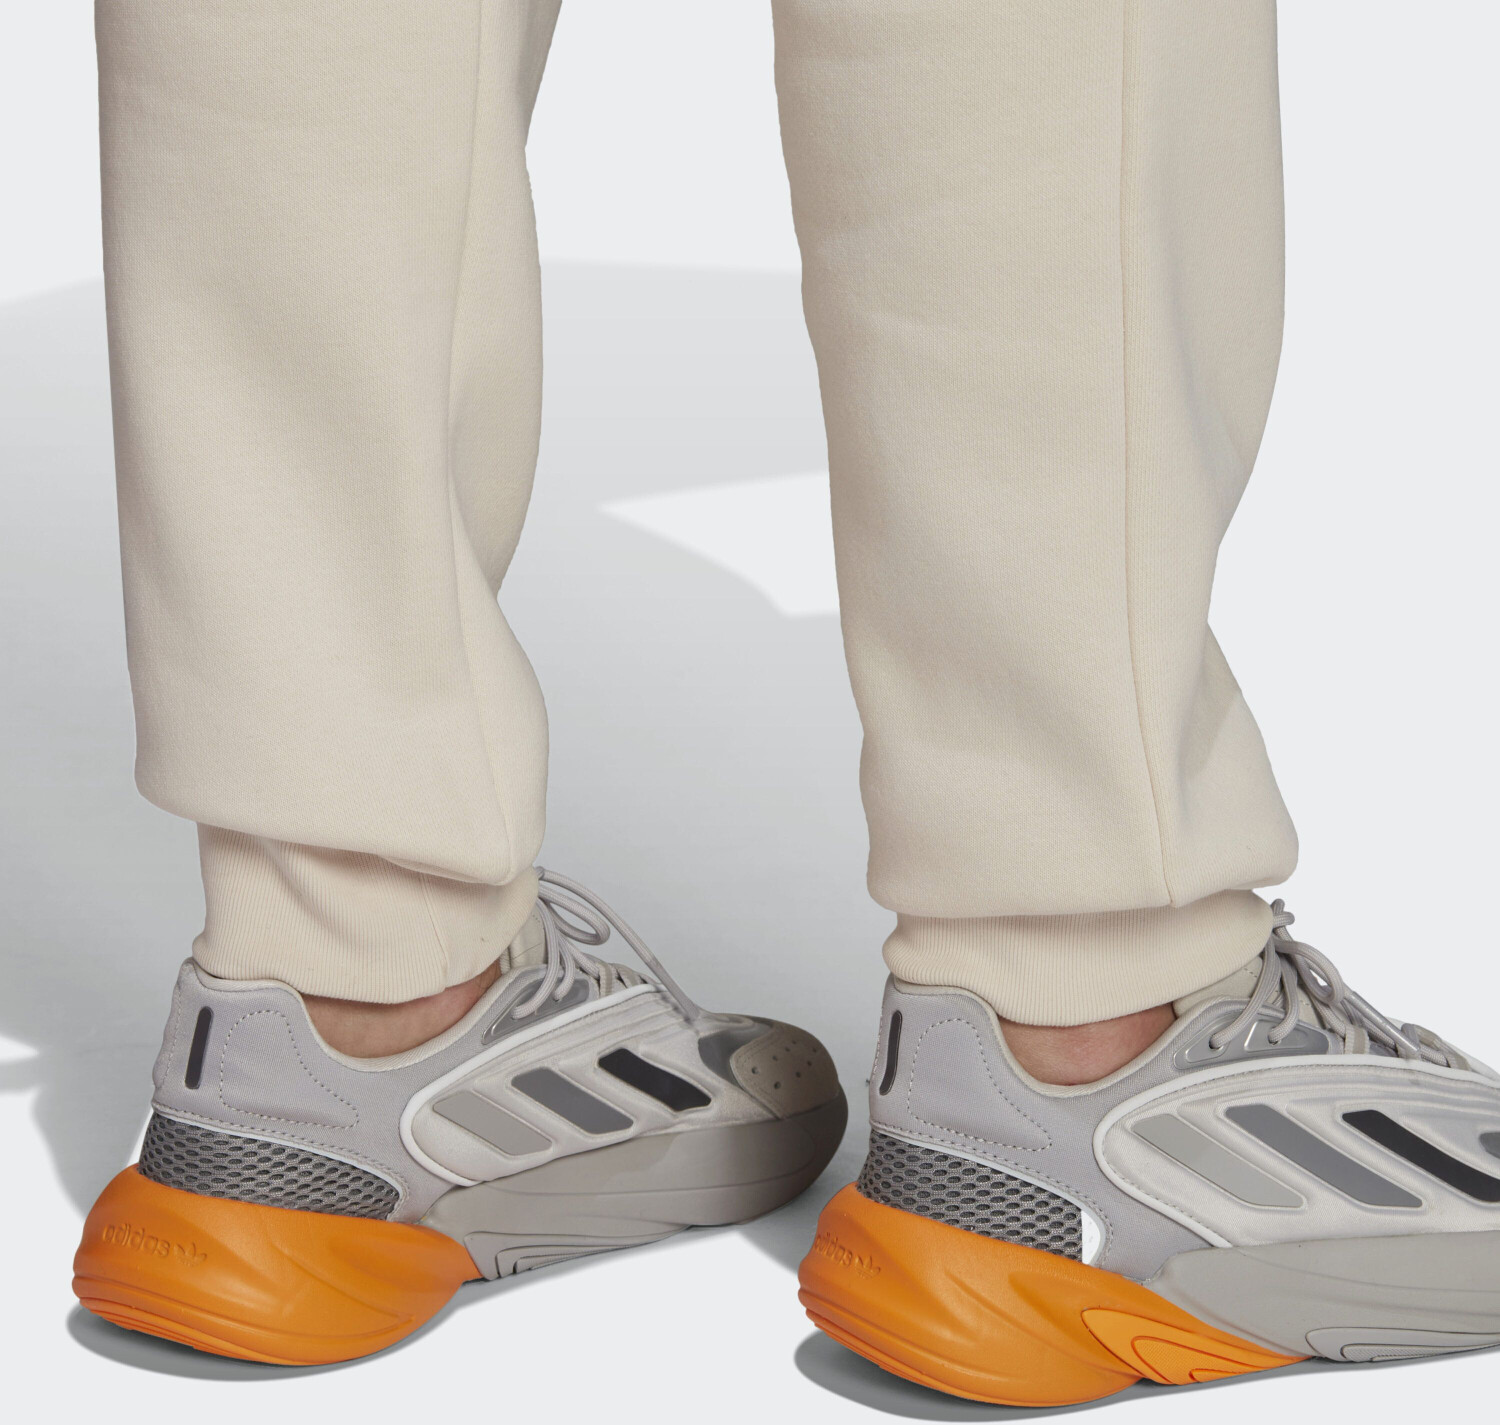 Adidas Adicolor Essentials Trefoil Joggers wonder white ab 38,99 € |  Preisvergleich bei